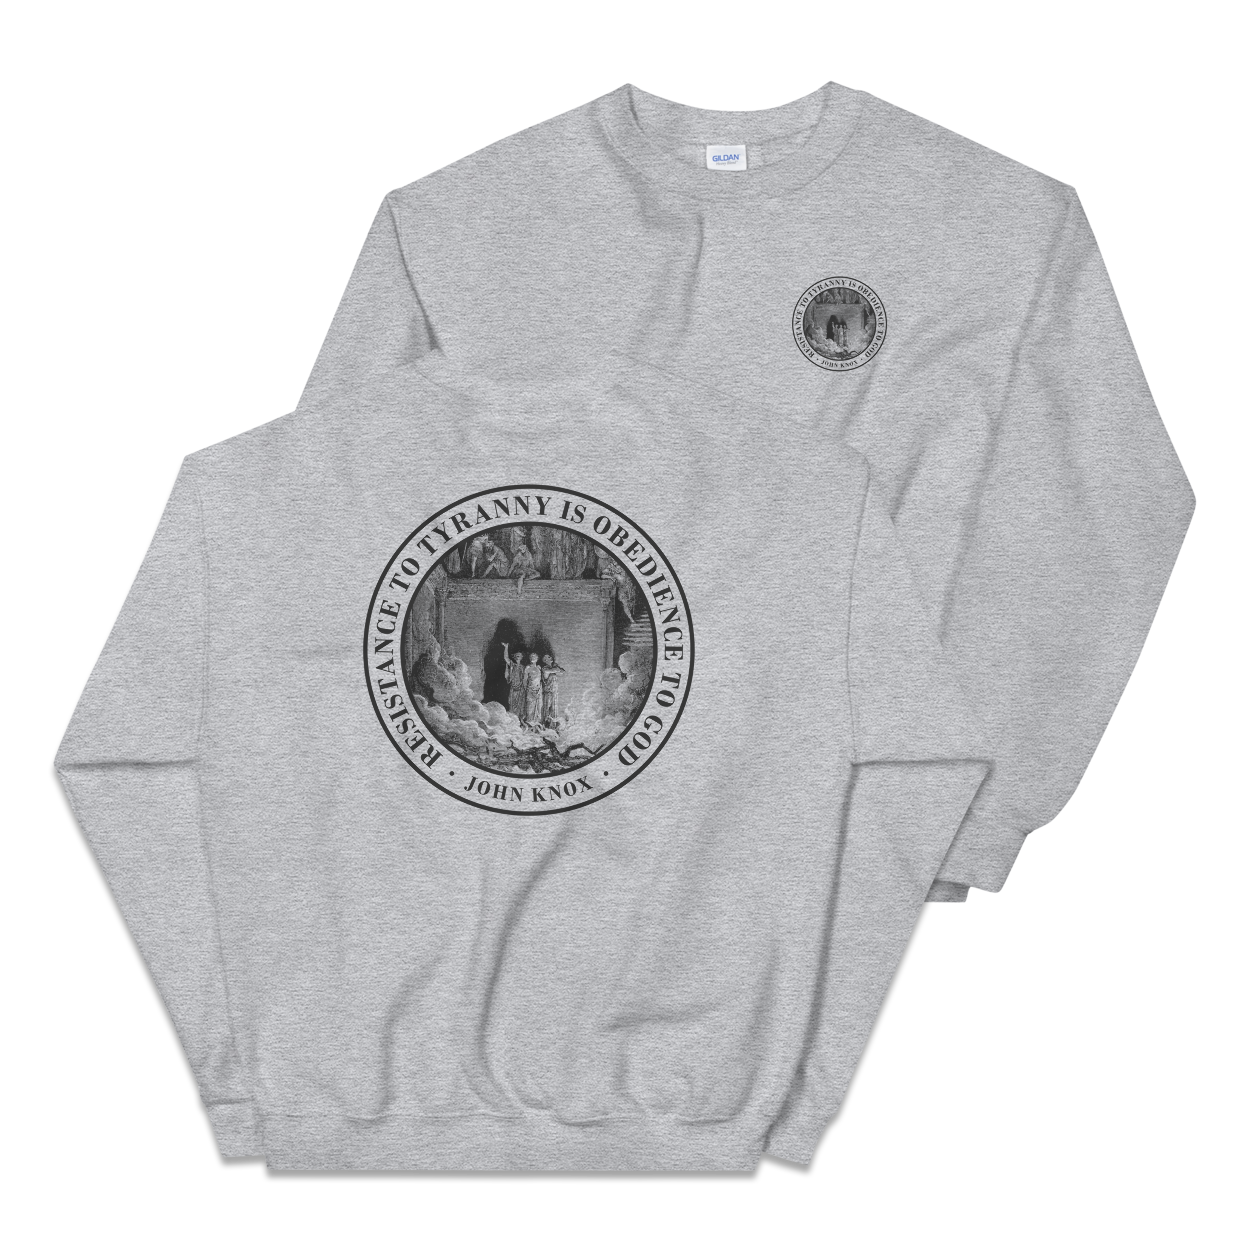 Resist Tyranny Sweatshirt - 1689 Designs